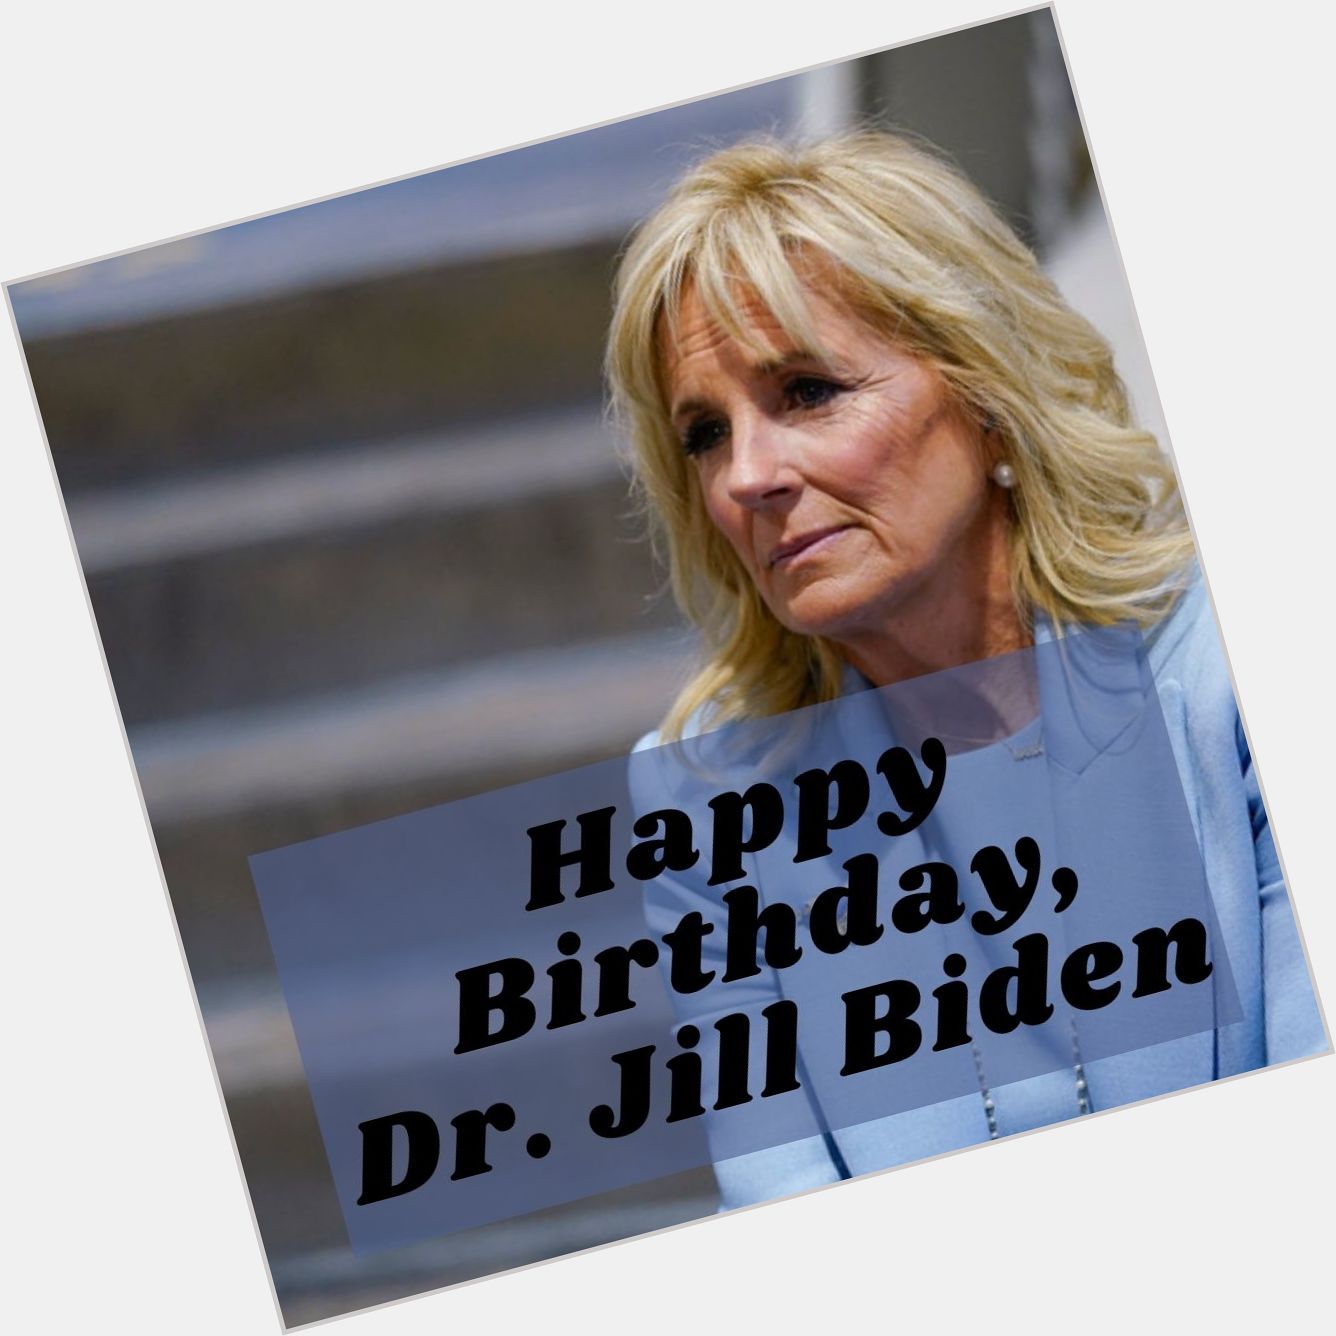 HAPPY BIRTHDAY First Lady Dr. Jill Biden turns 71! 